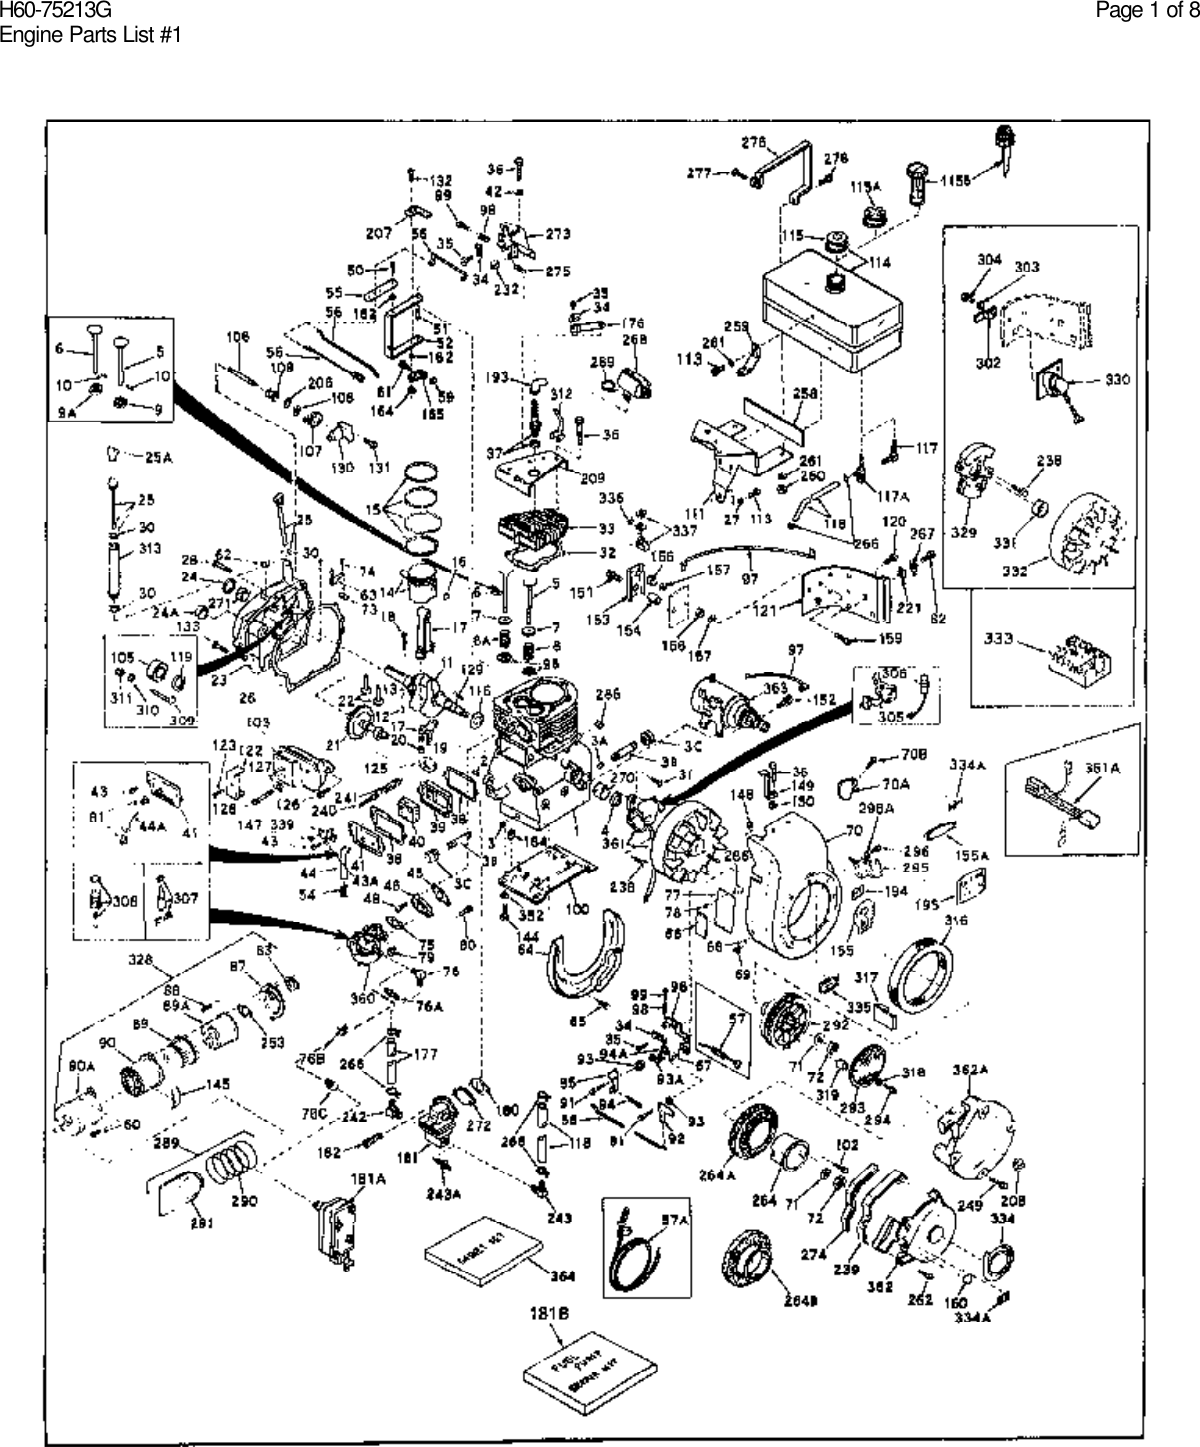 Page 1 of 8 - Diagram And/or PartsList Yardman Snowblower Engine Tecumseh H60-75213G